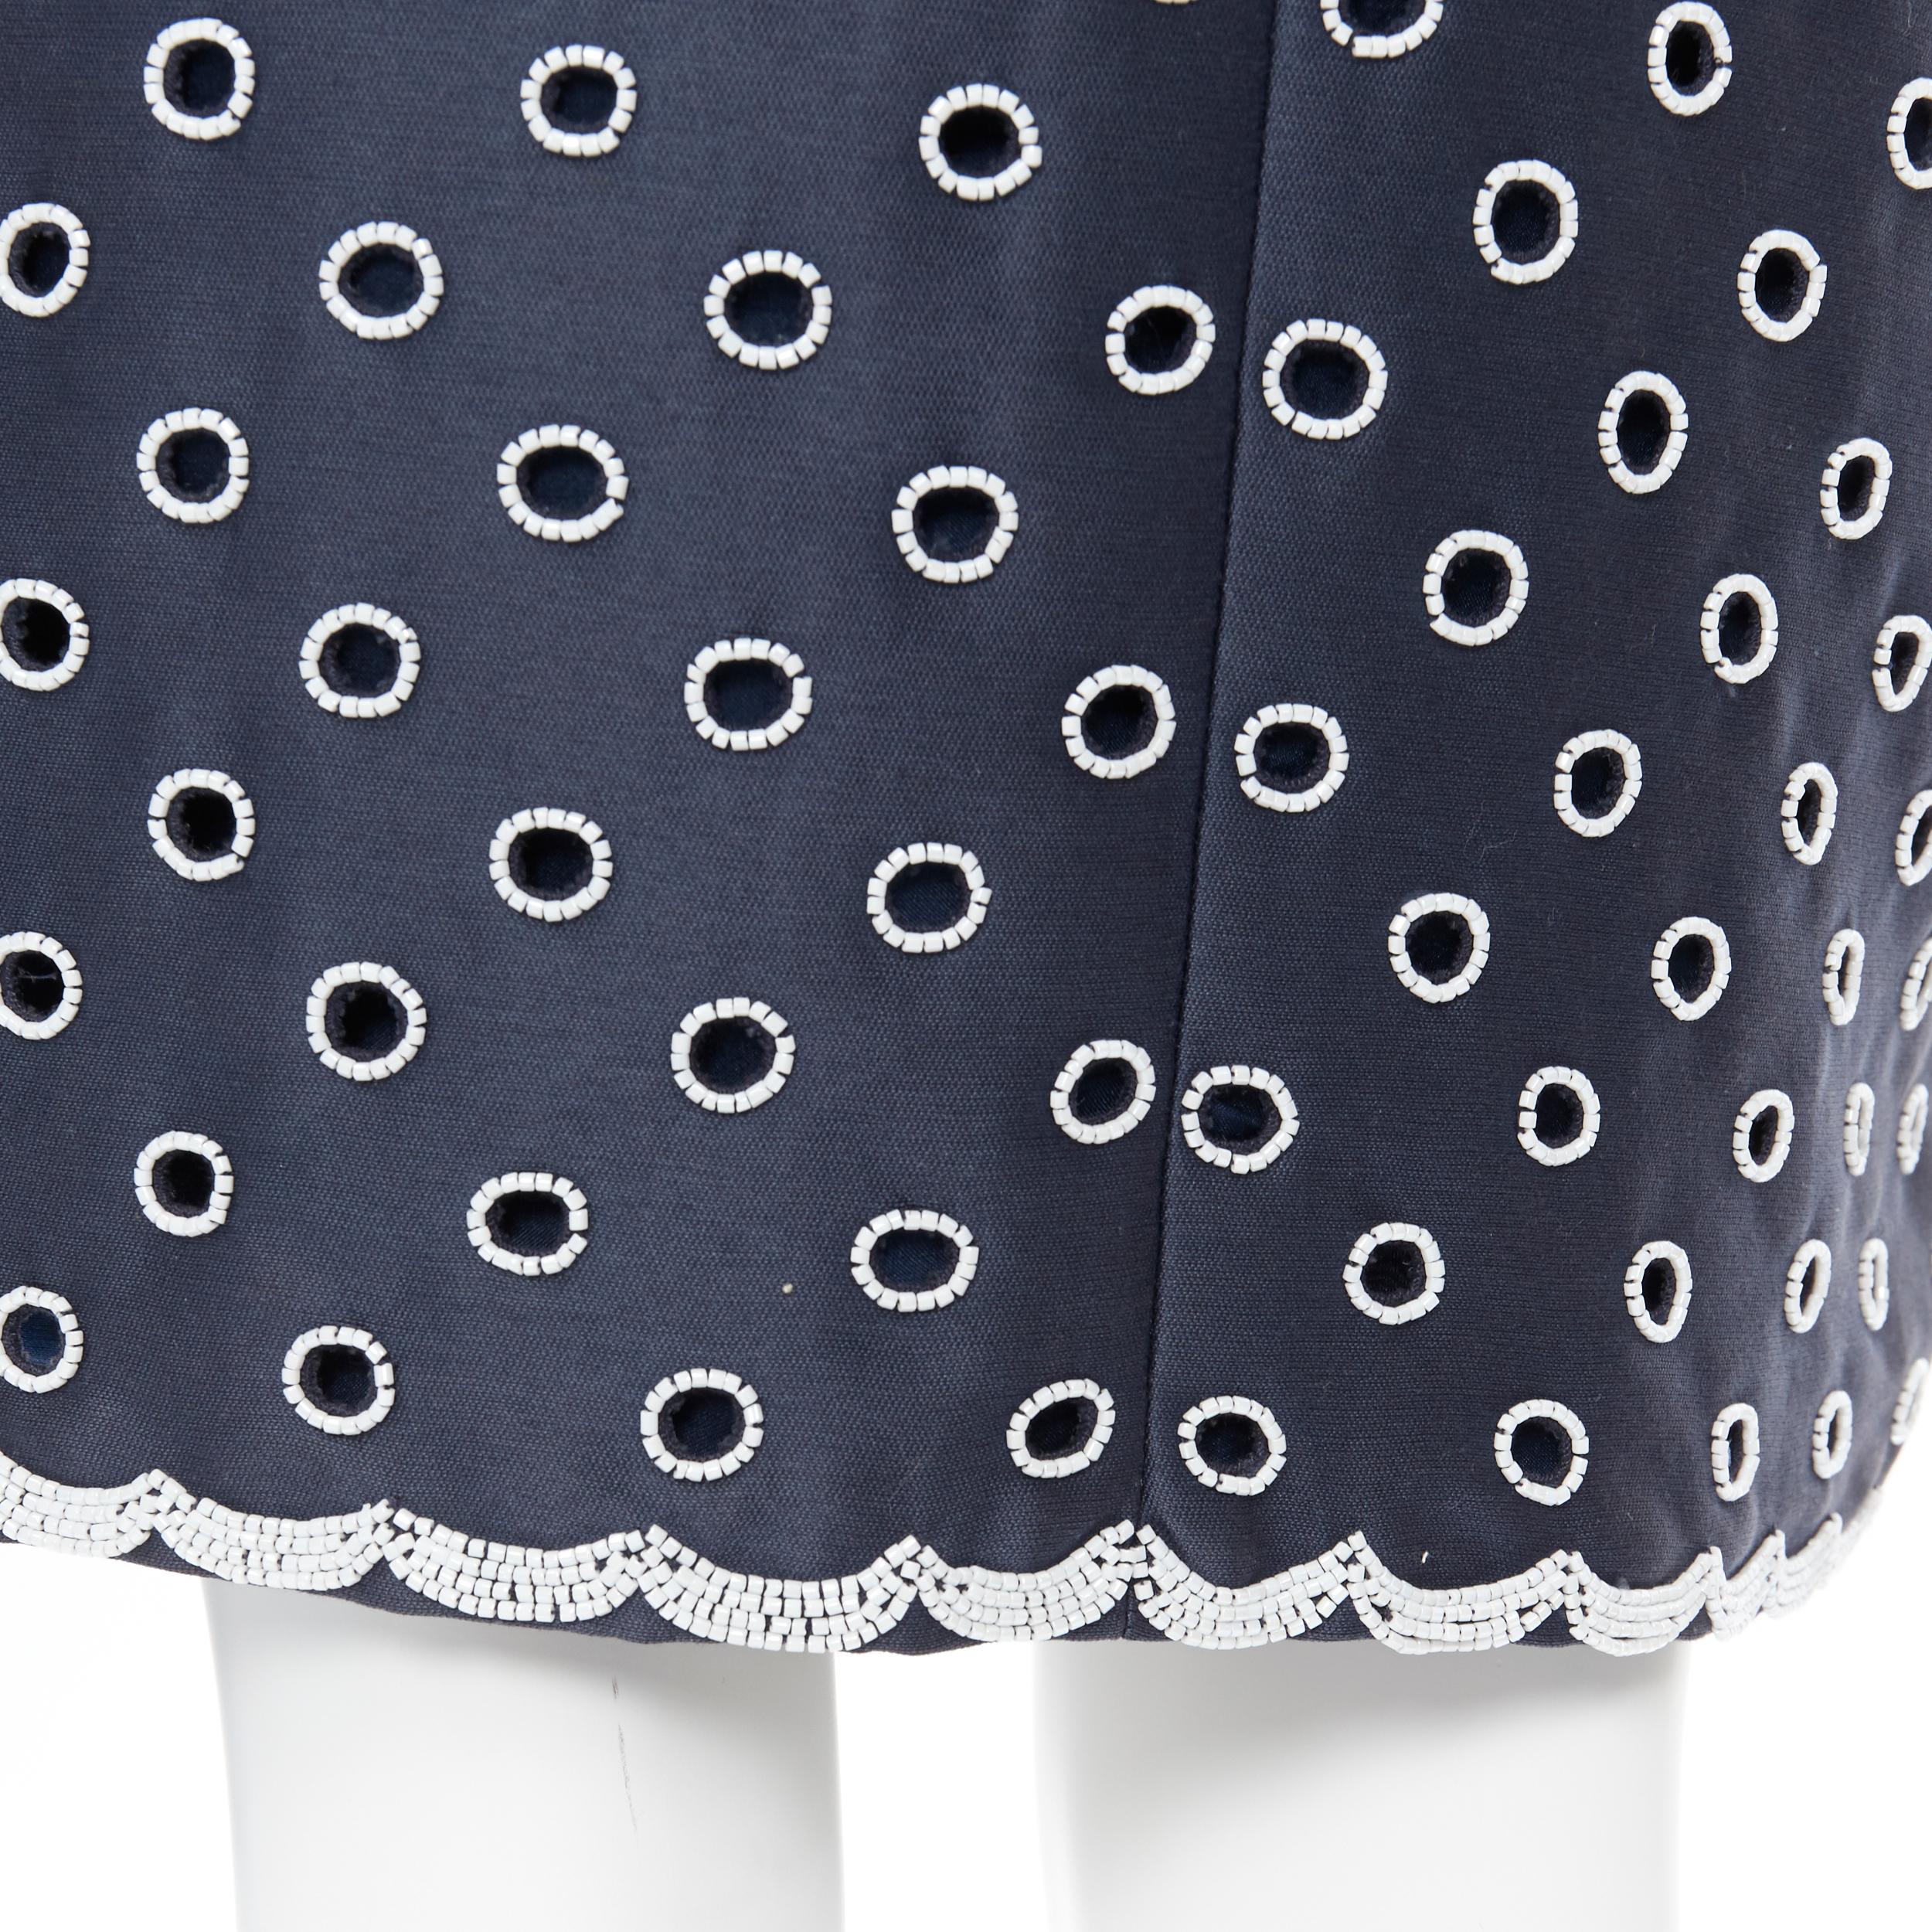 OSCAR DE LA RENTA R11 navy blue cotton white bead embroidered cut out skirt US0
Brand: Oscar de la Renta
Collection: R11
Model Name / Style: Pencil skirt
Material: Cotton blend
Color: Navy
Pattern: Polka dot
Closure: Zip
Extra Detail: Bead